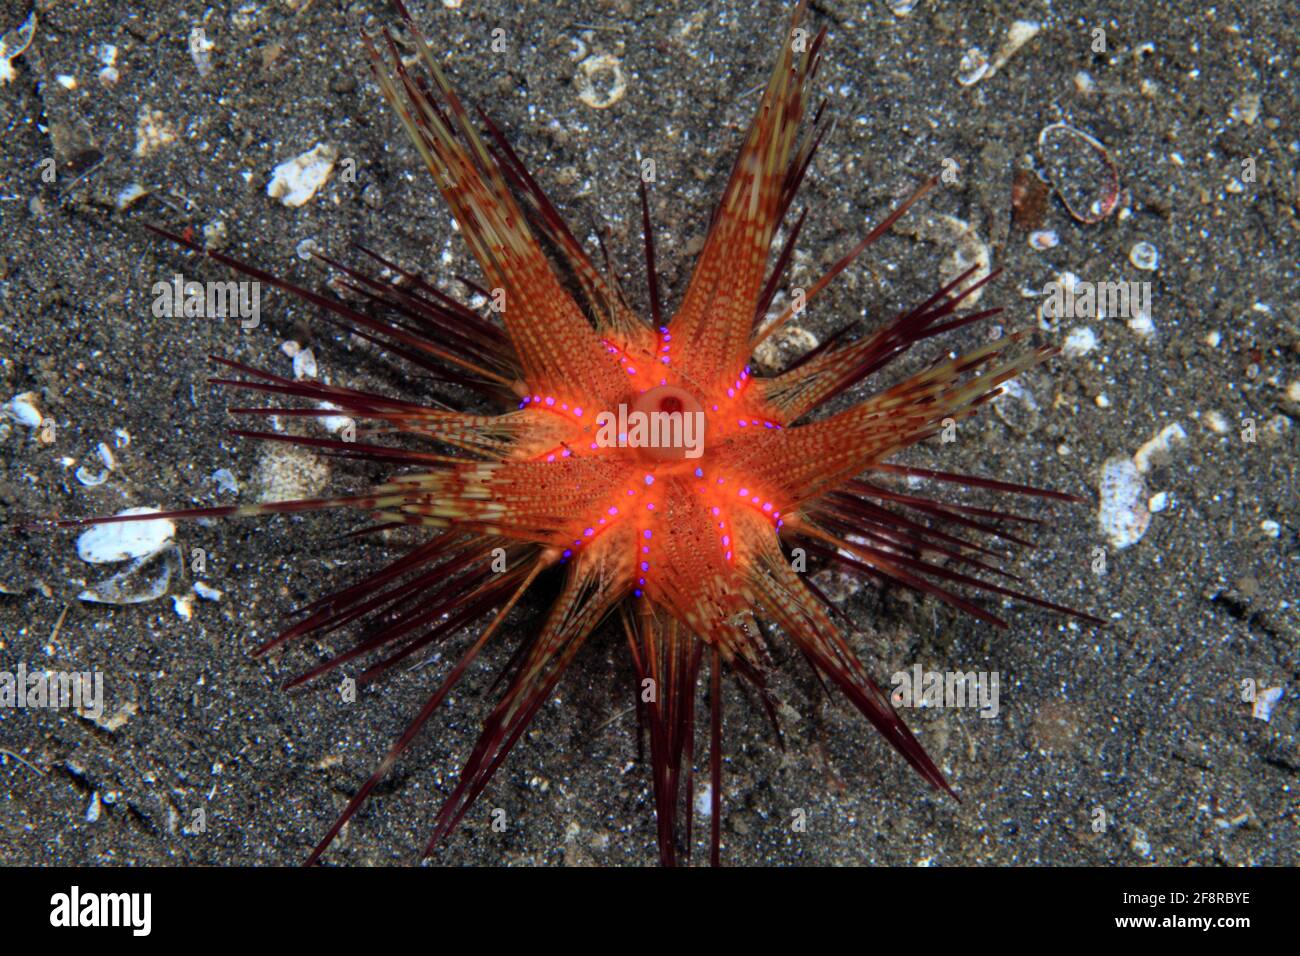 Roter Diademseeigel auf Sandgrund, Astropyga radiata (Lembeh, Sulawesi, Indonesien) - Blue spotted sea urchin (Lembeh, Sulawesi, Indonesien) Stock Photo